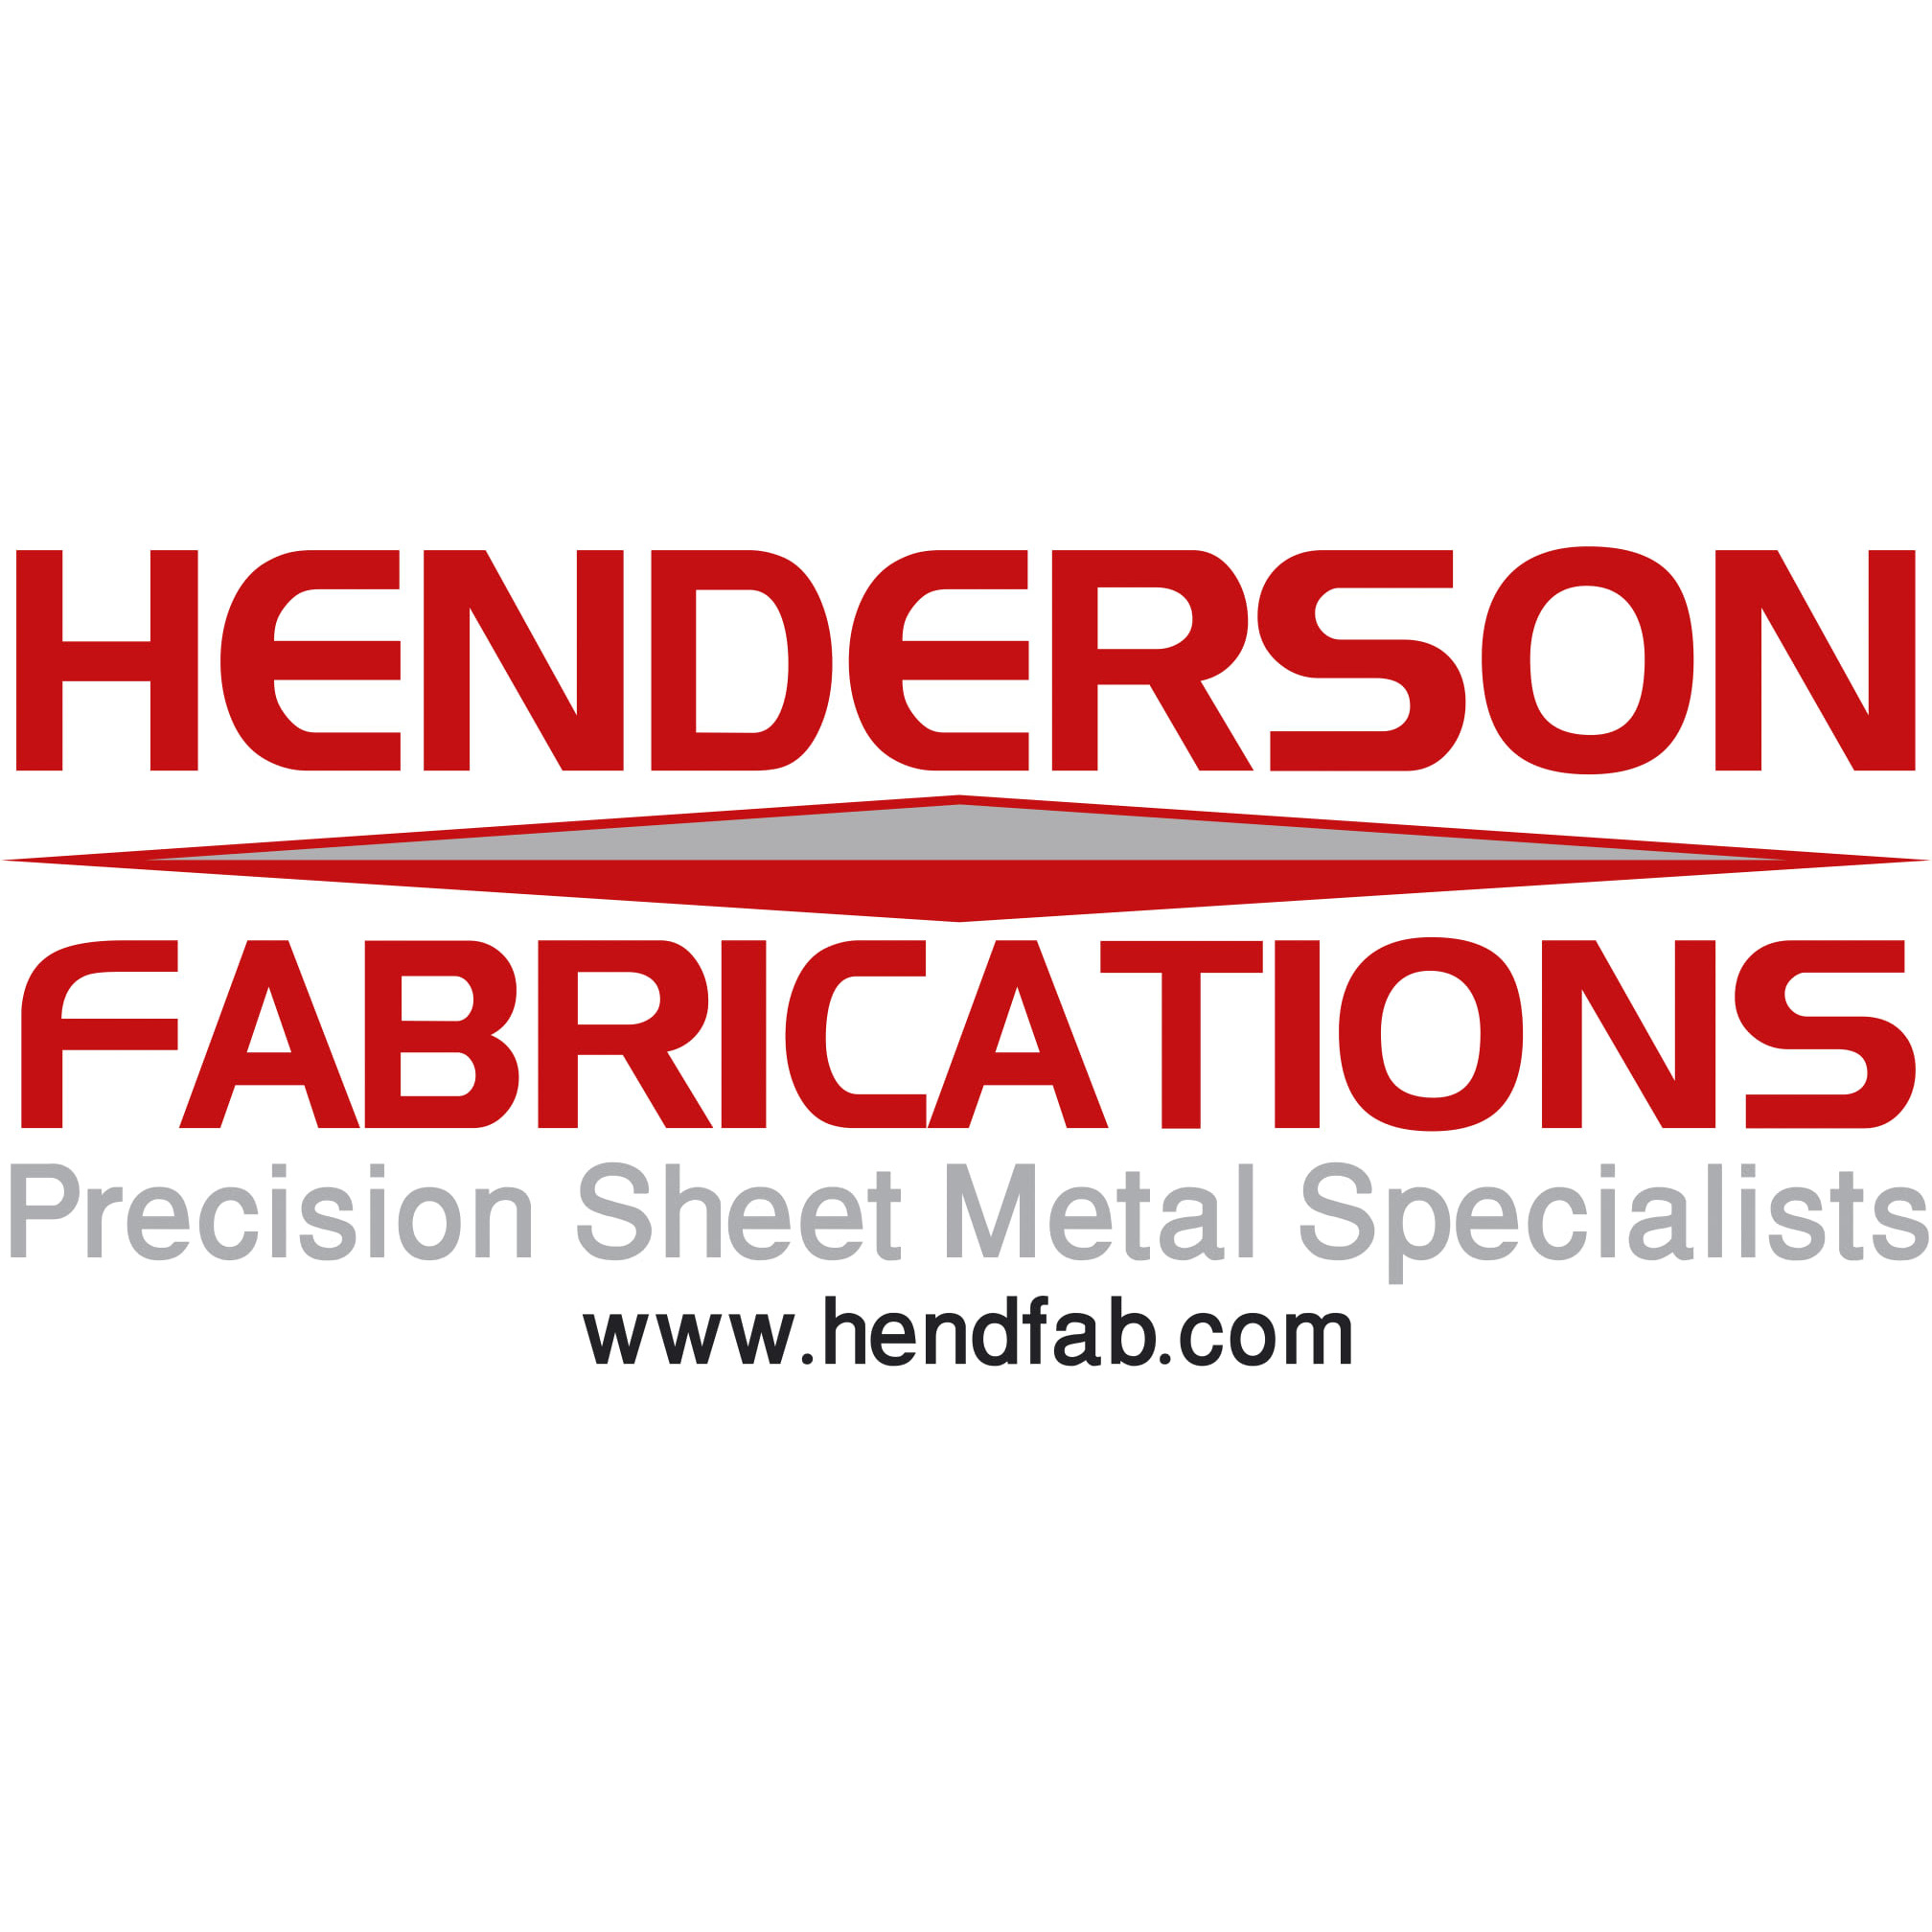 Henderson Farbrications - Northampton, Northamptonshire NN3 6LL - 01604 499200 | ShowMeLocal.com